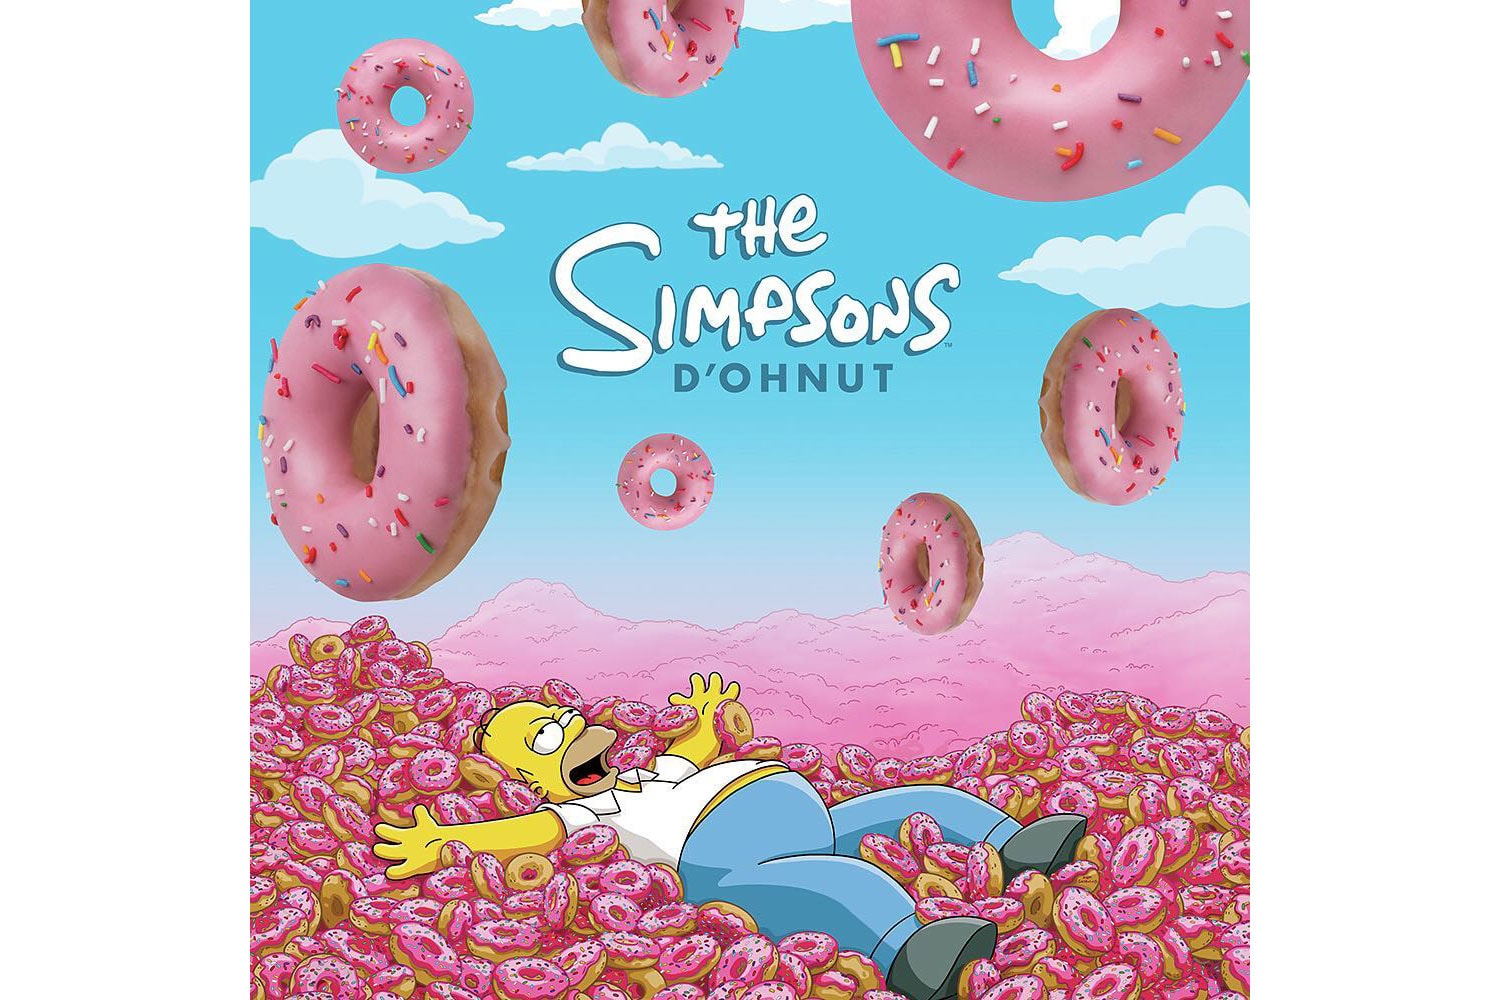 Krispy Kreme D’ohnut The Simpsons Homer Simpson donut release Australia